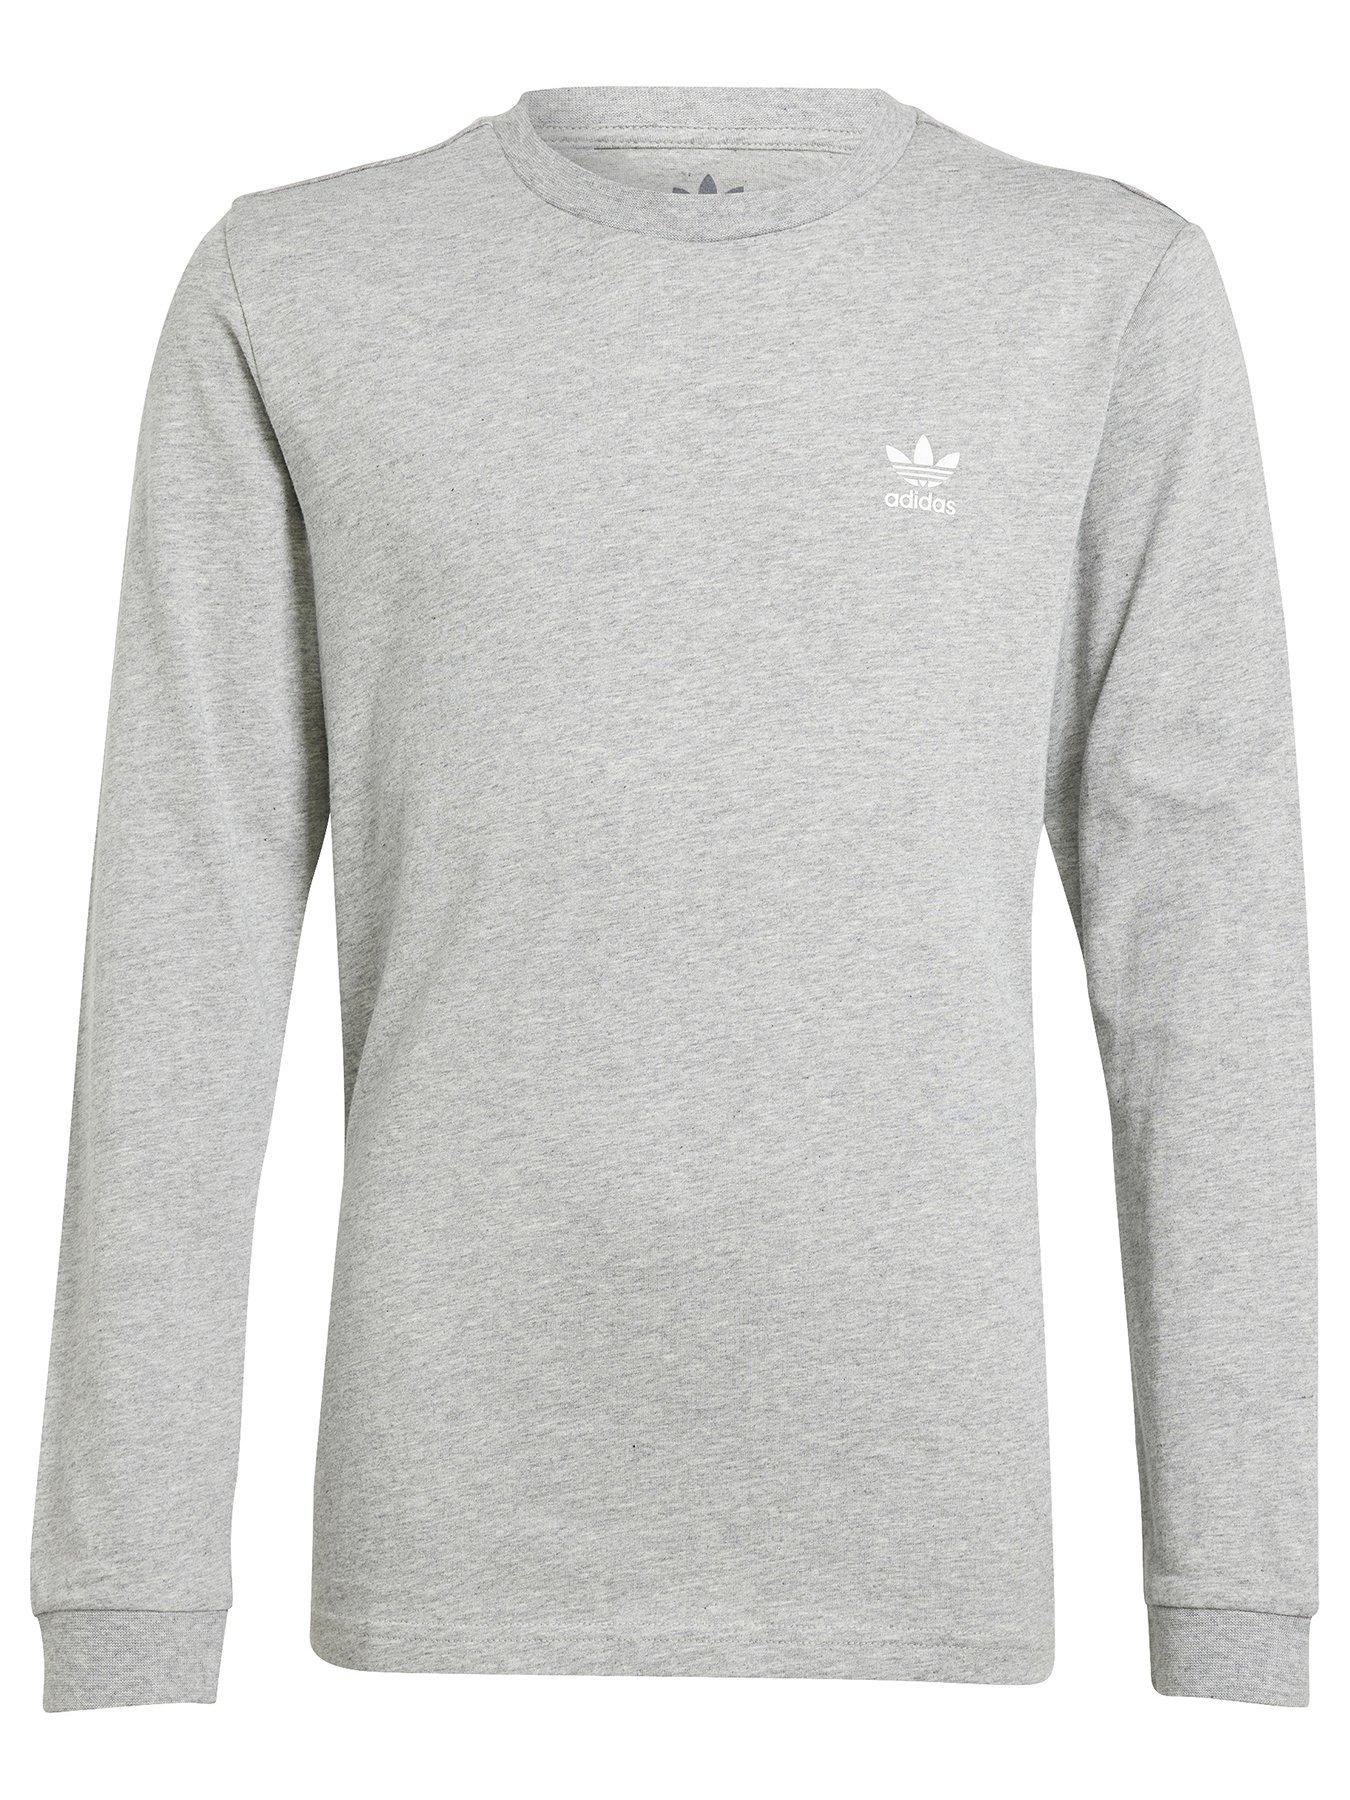 Boys, adidas Originals Junior Unisex Long Sleeve T-Shirt - Grey, Grey, Size 7-8 Years